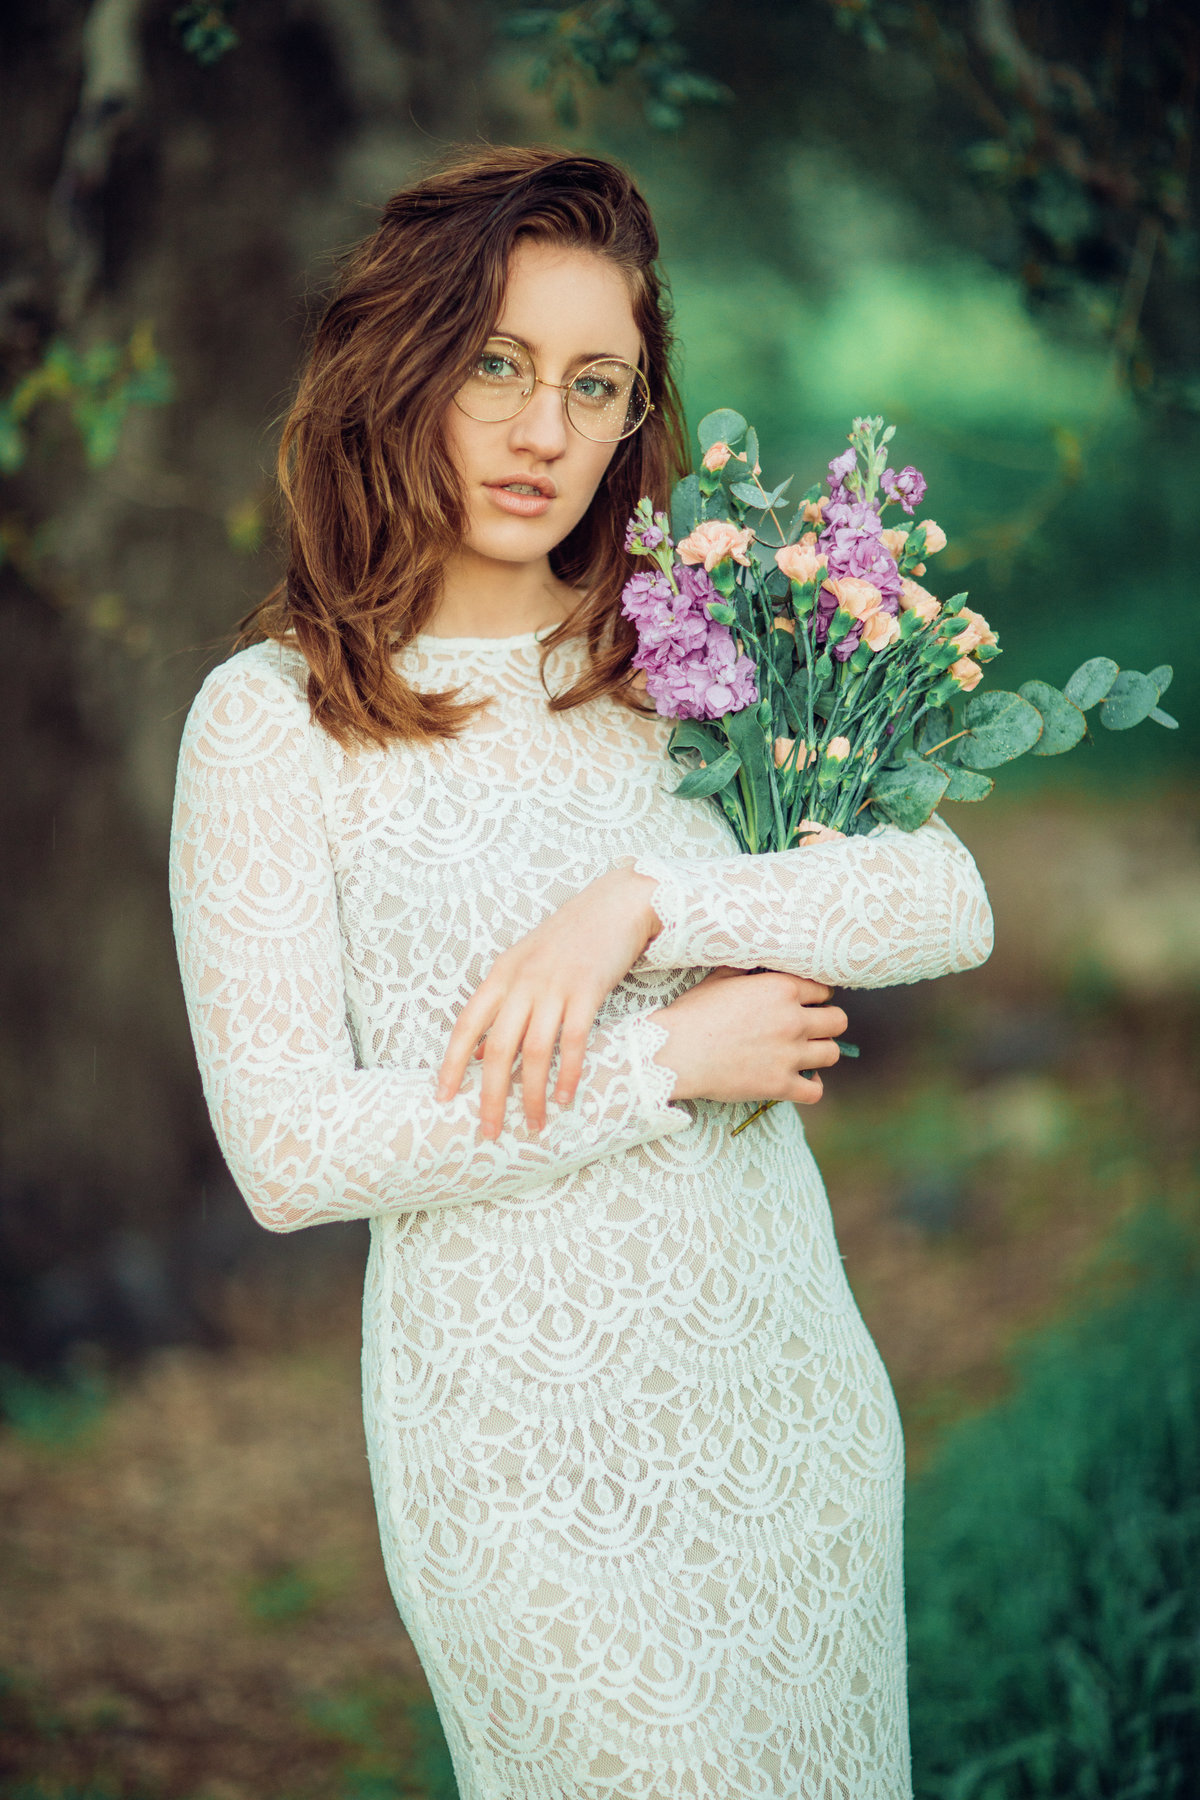 Young Woman Holding Flowers Portrait Photo Sessions LA